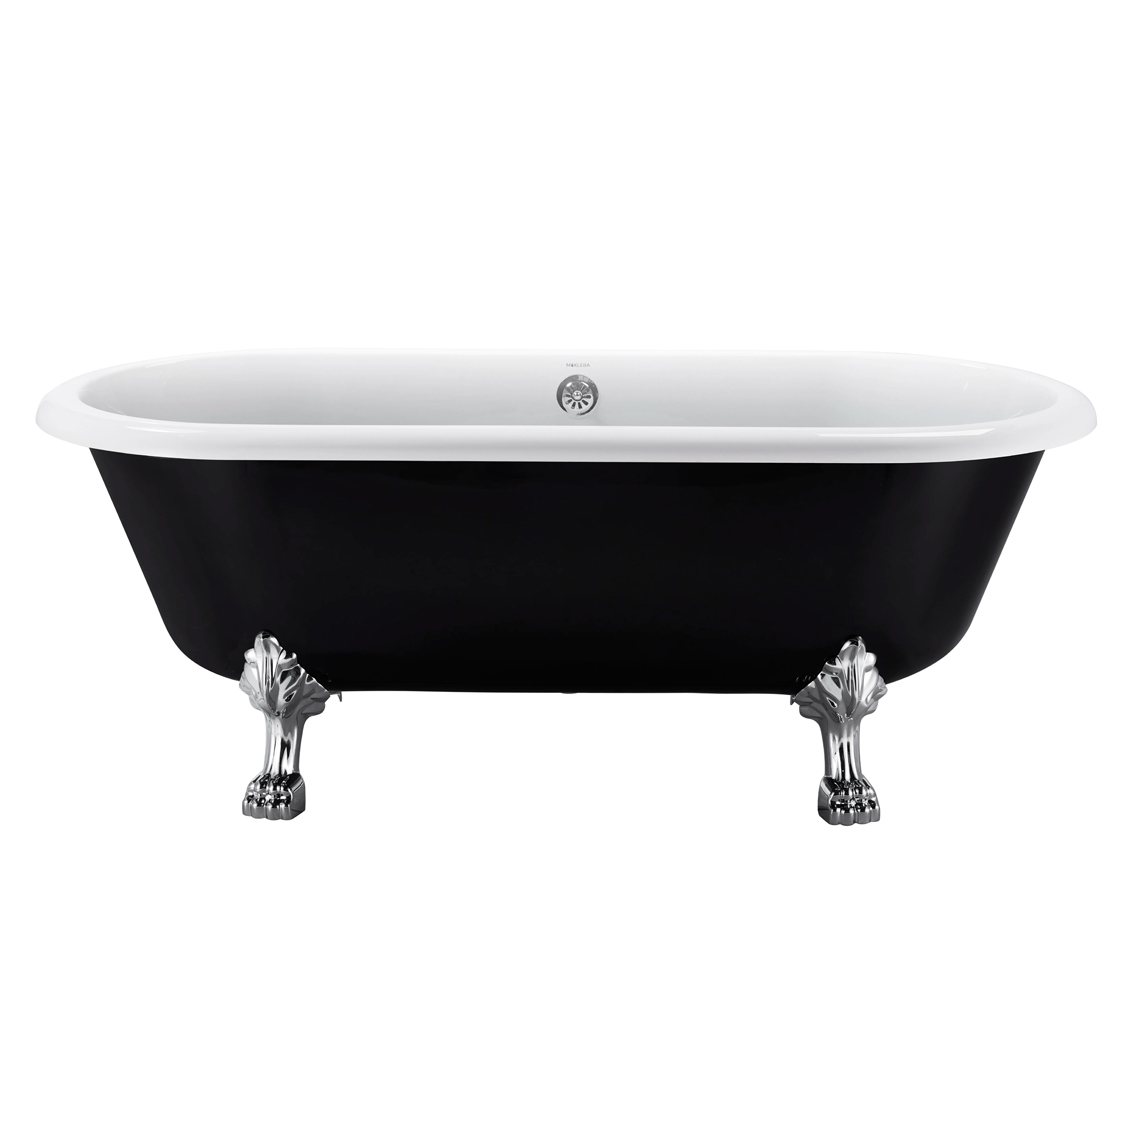 67 inches Acrylic Freestanding Bathtub Contemporary Soaking Tub white inside black outside